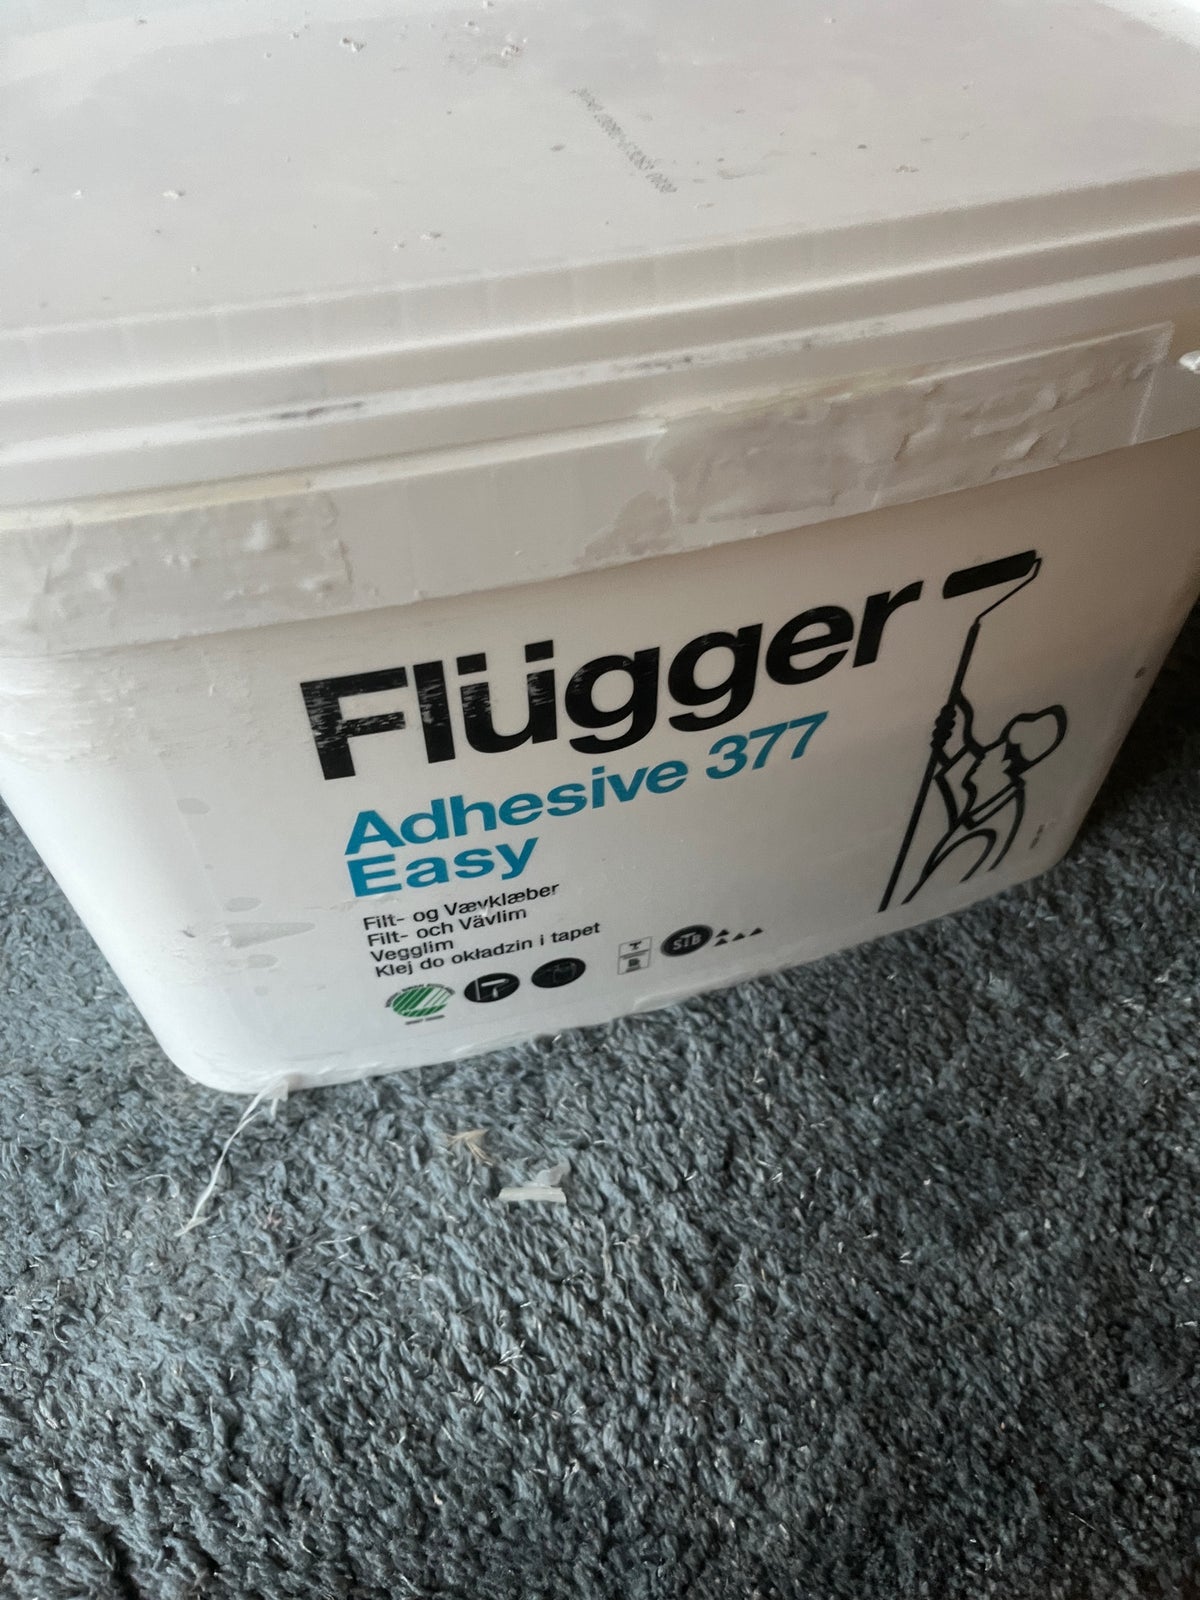 Limfilt / Adhesive 377 Easy / Filt- og vægklæber, Flügger,